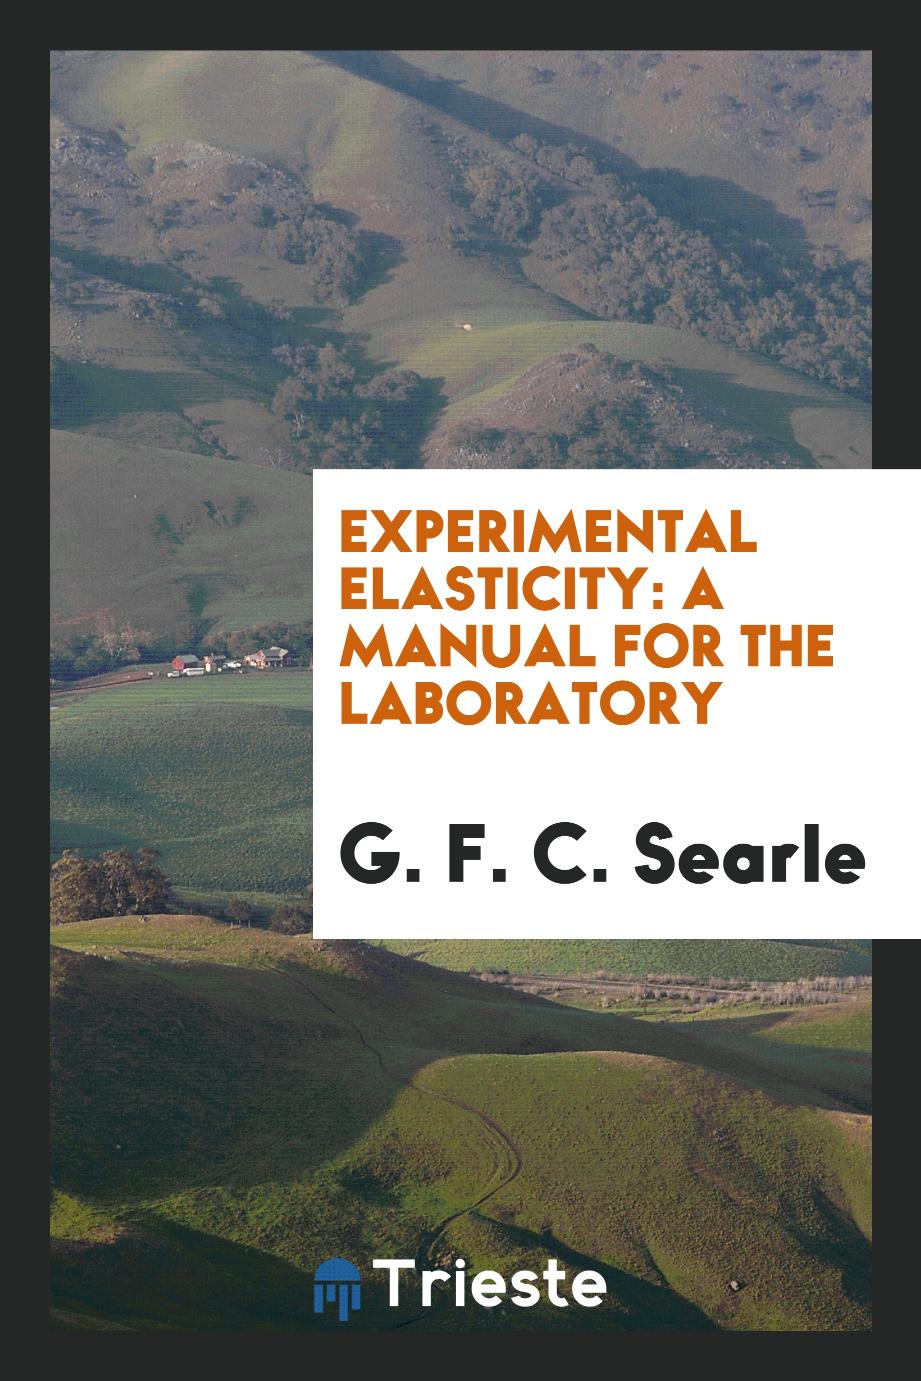 Experimental elasticity: a manual for the laboratory